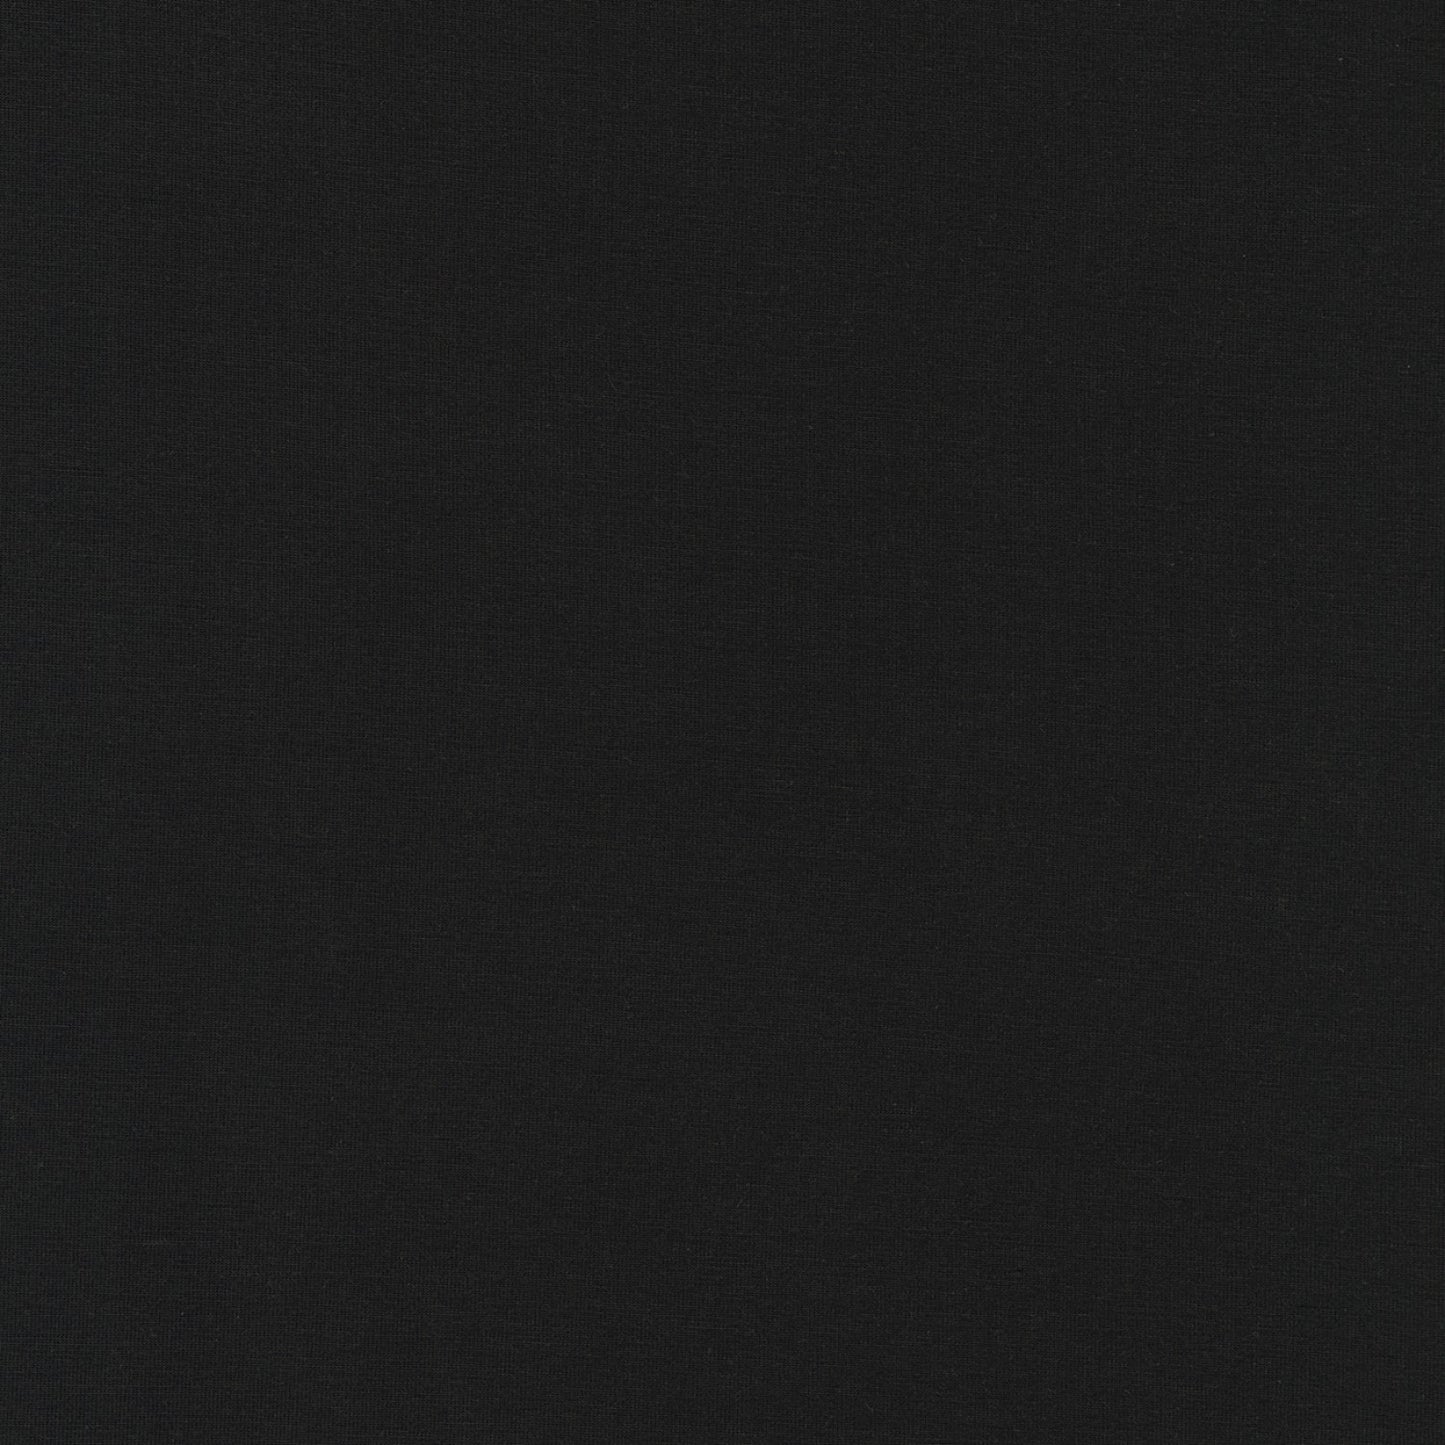 21" Remnant - TENCEL™ Lyocell Spandex Jersey - Black